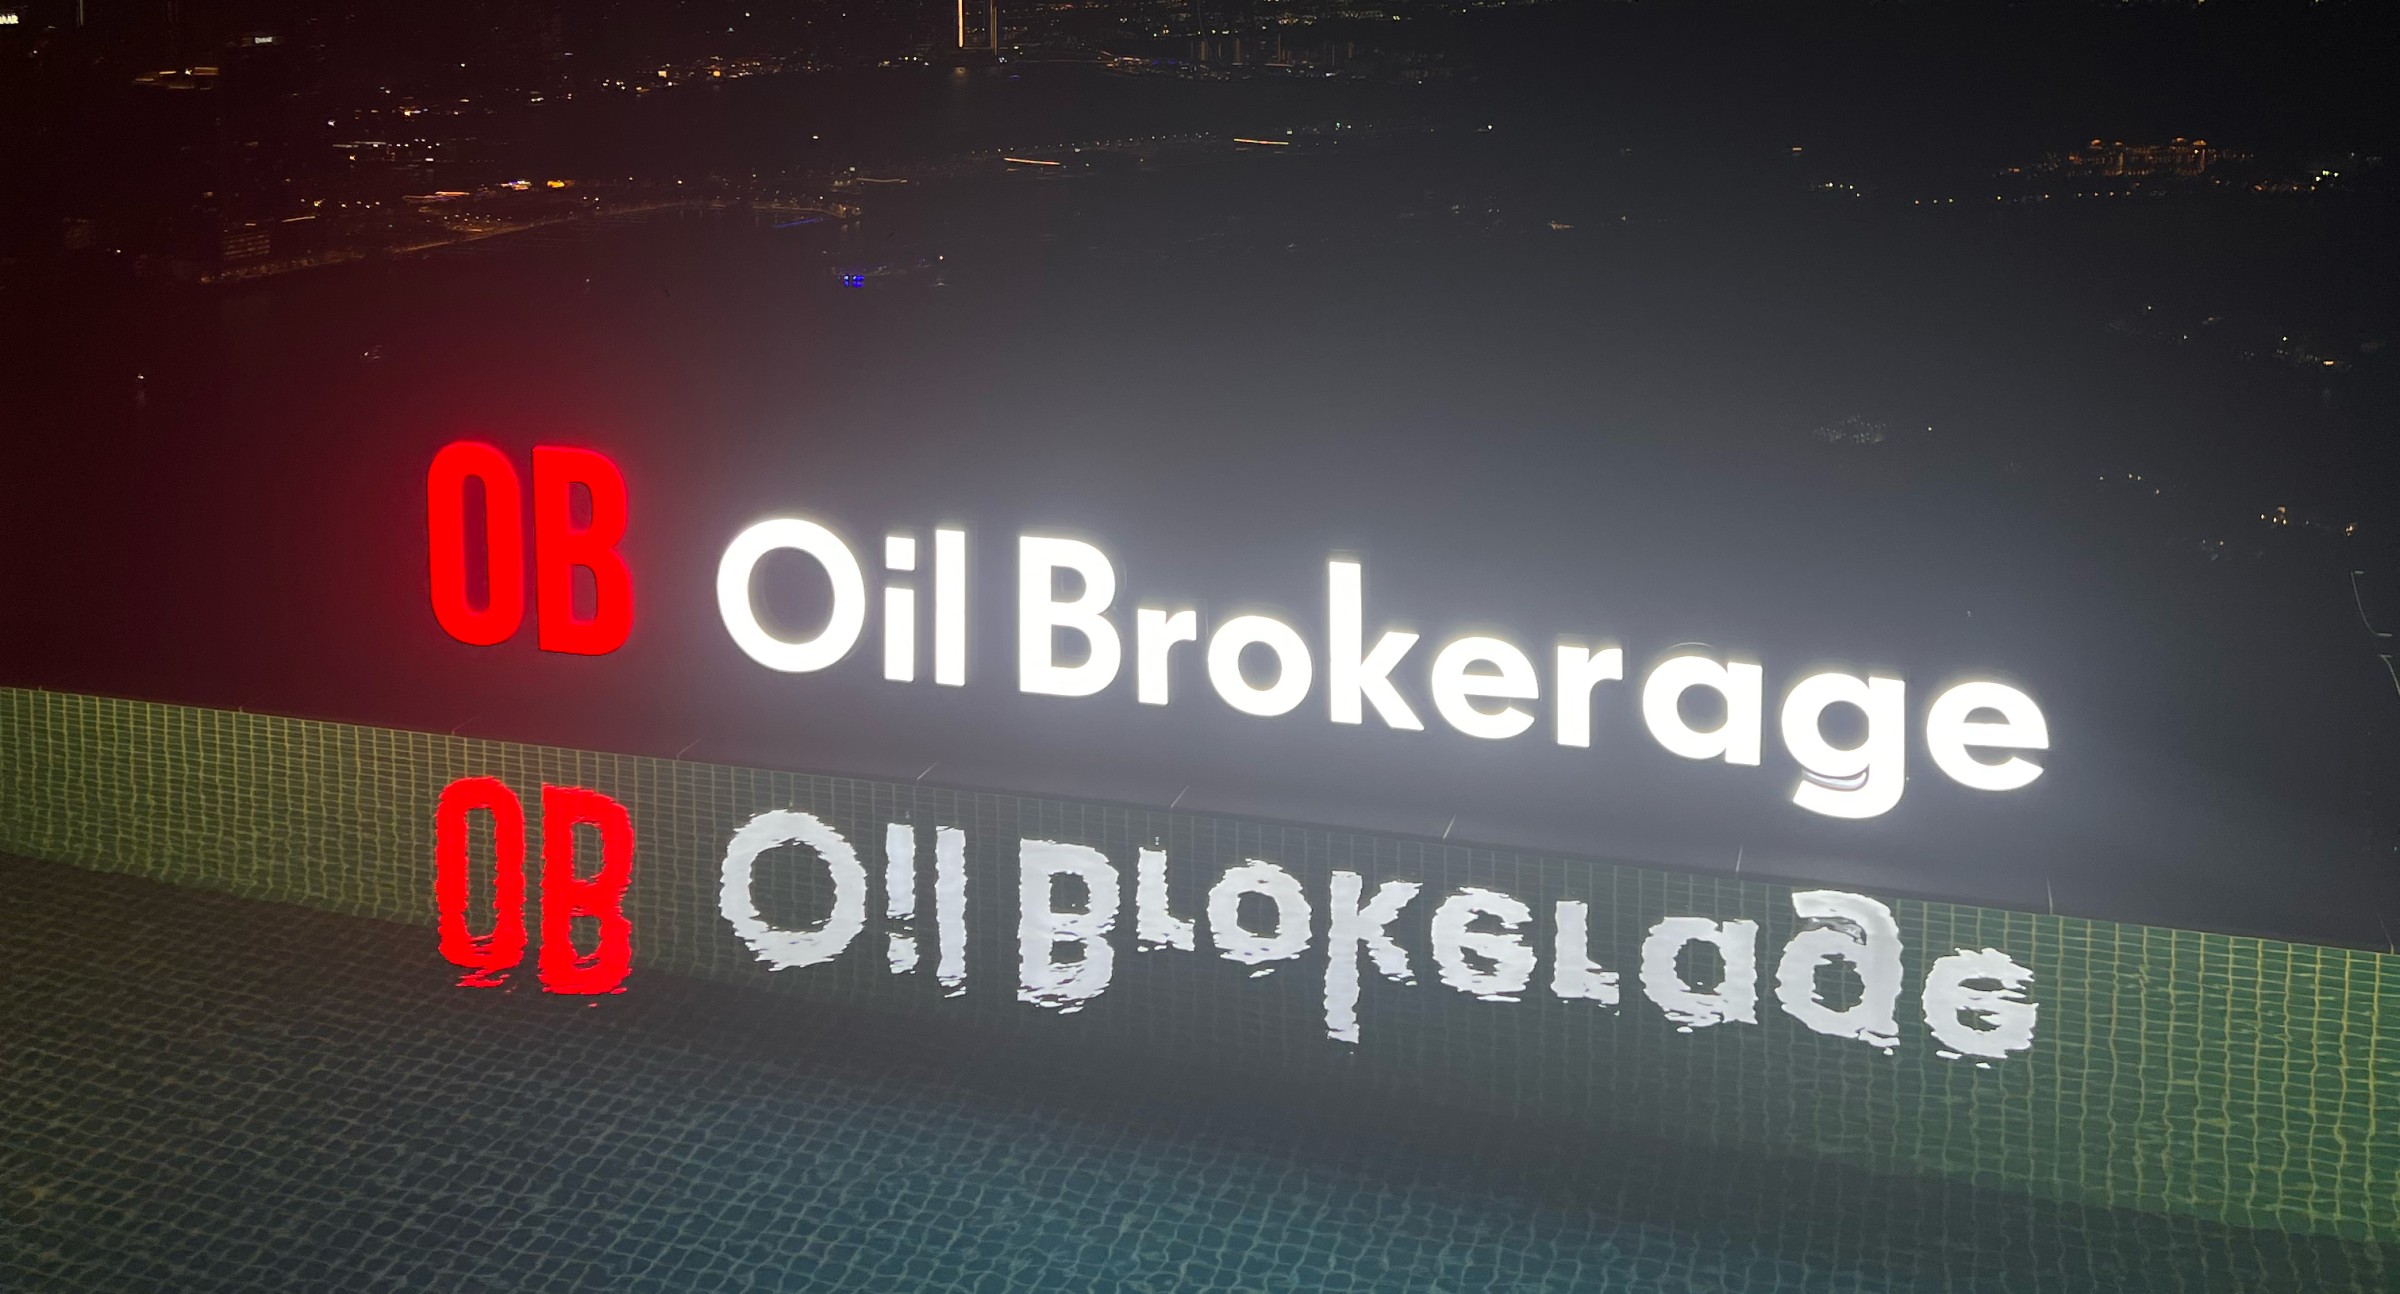 Oil Brokerage - Signage